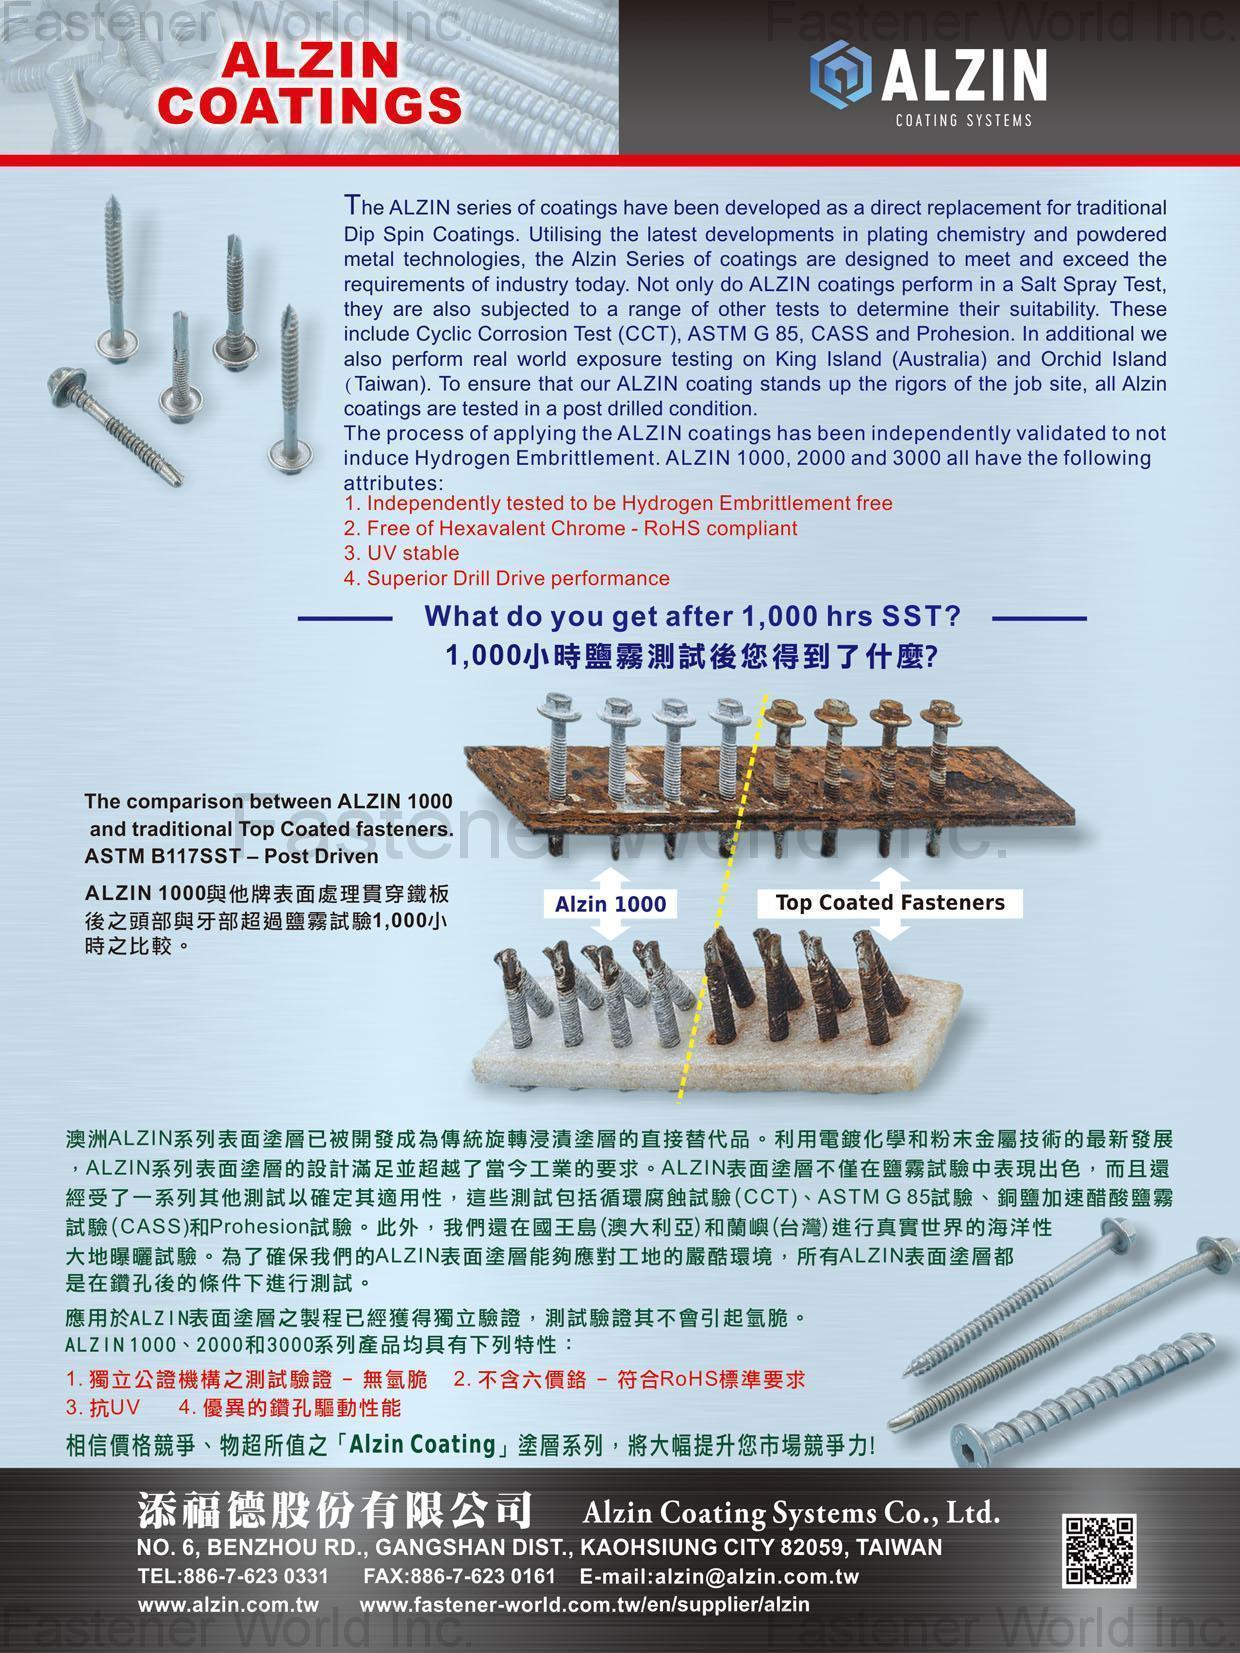 Alzin Coating Systems Taiwan , ALZIN® Coating, XIOD® Coating, High Corrosion-Resistance Surface Coating Specialist , Chromium-free Coating